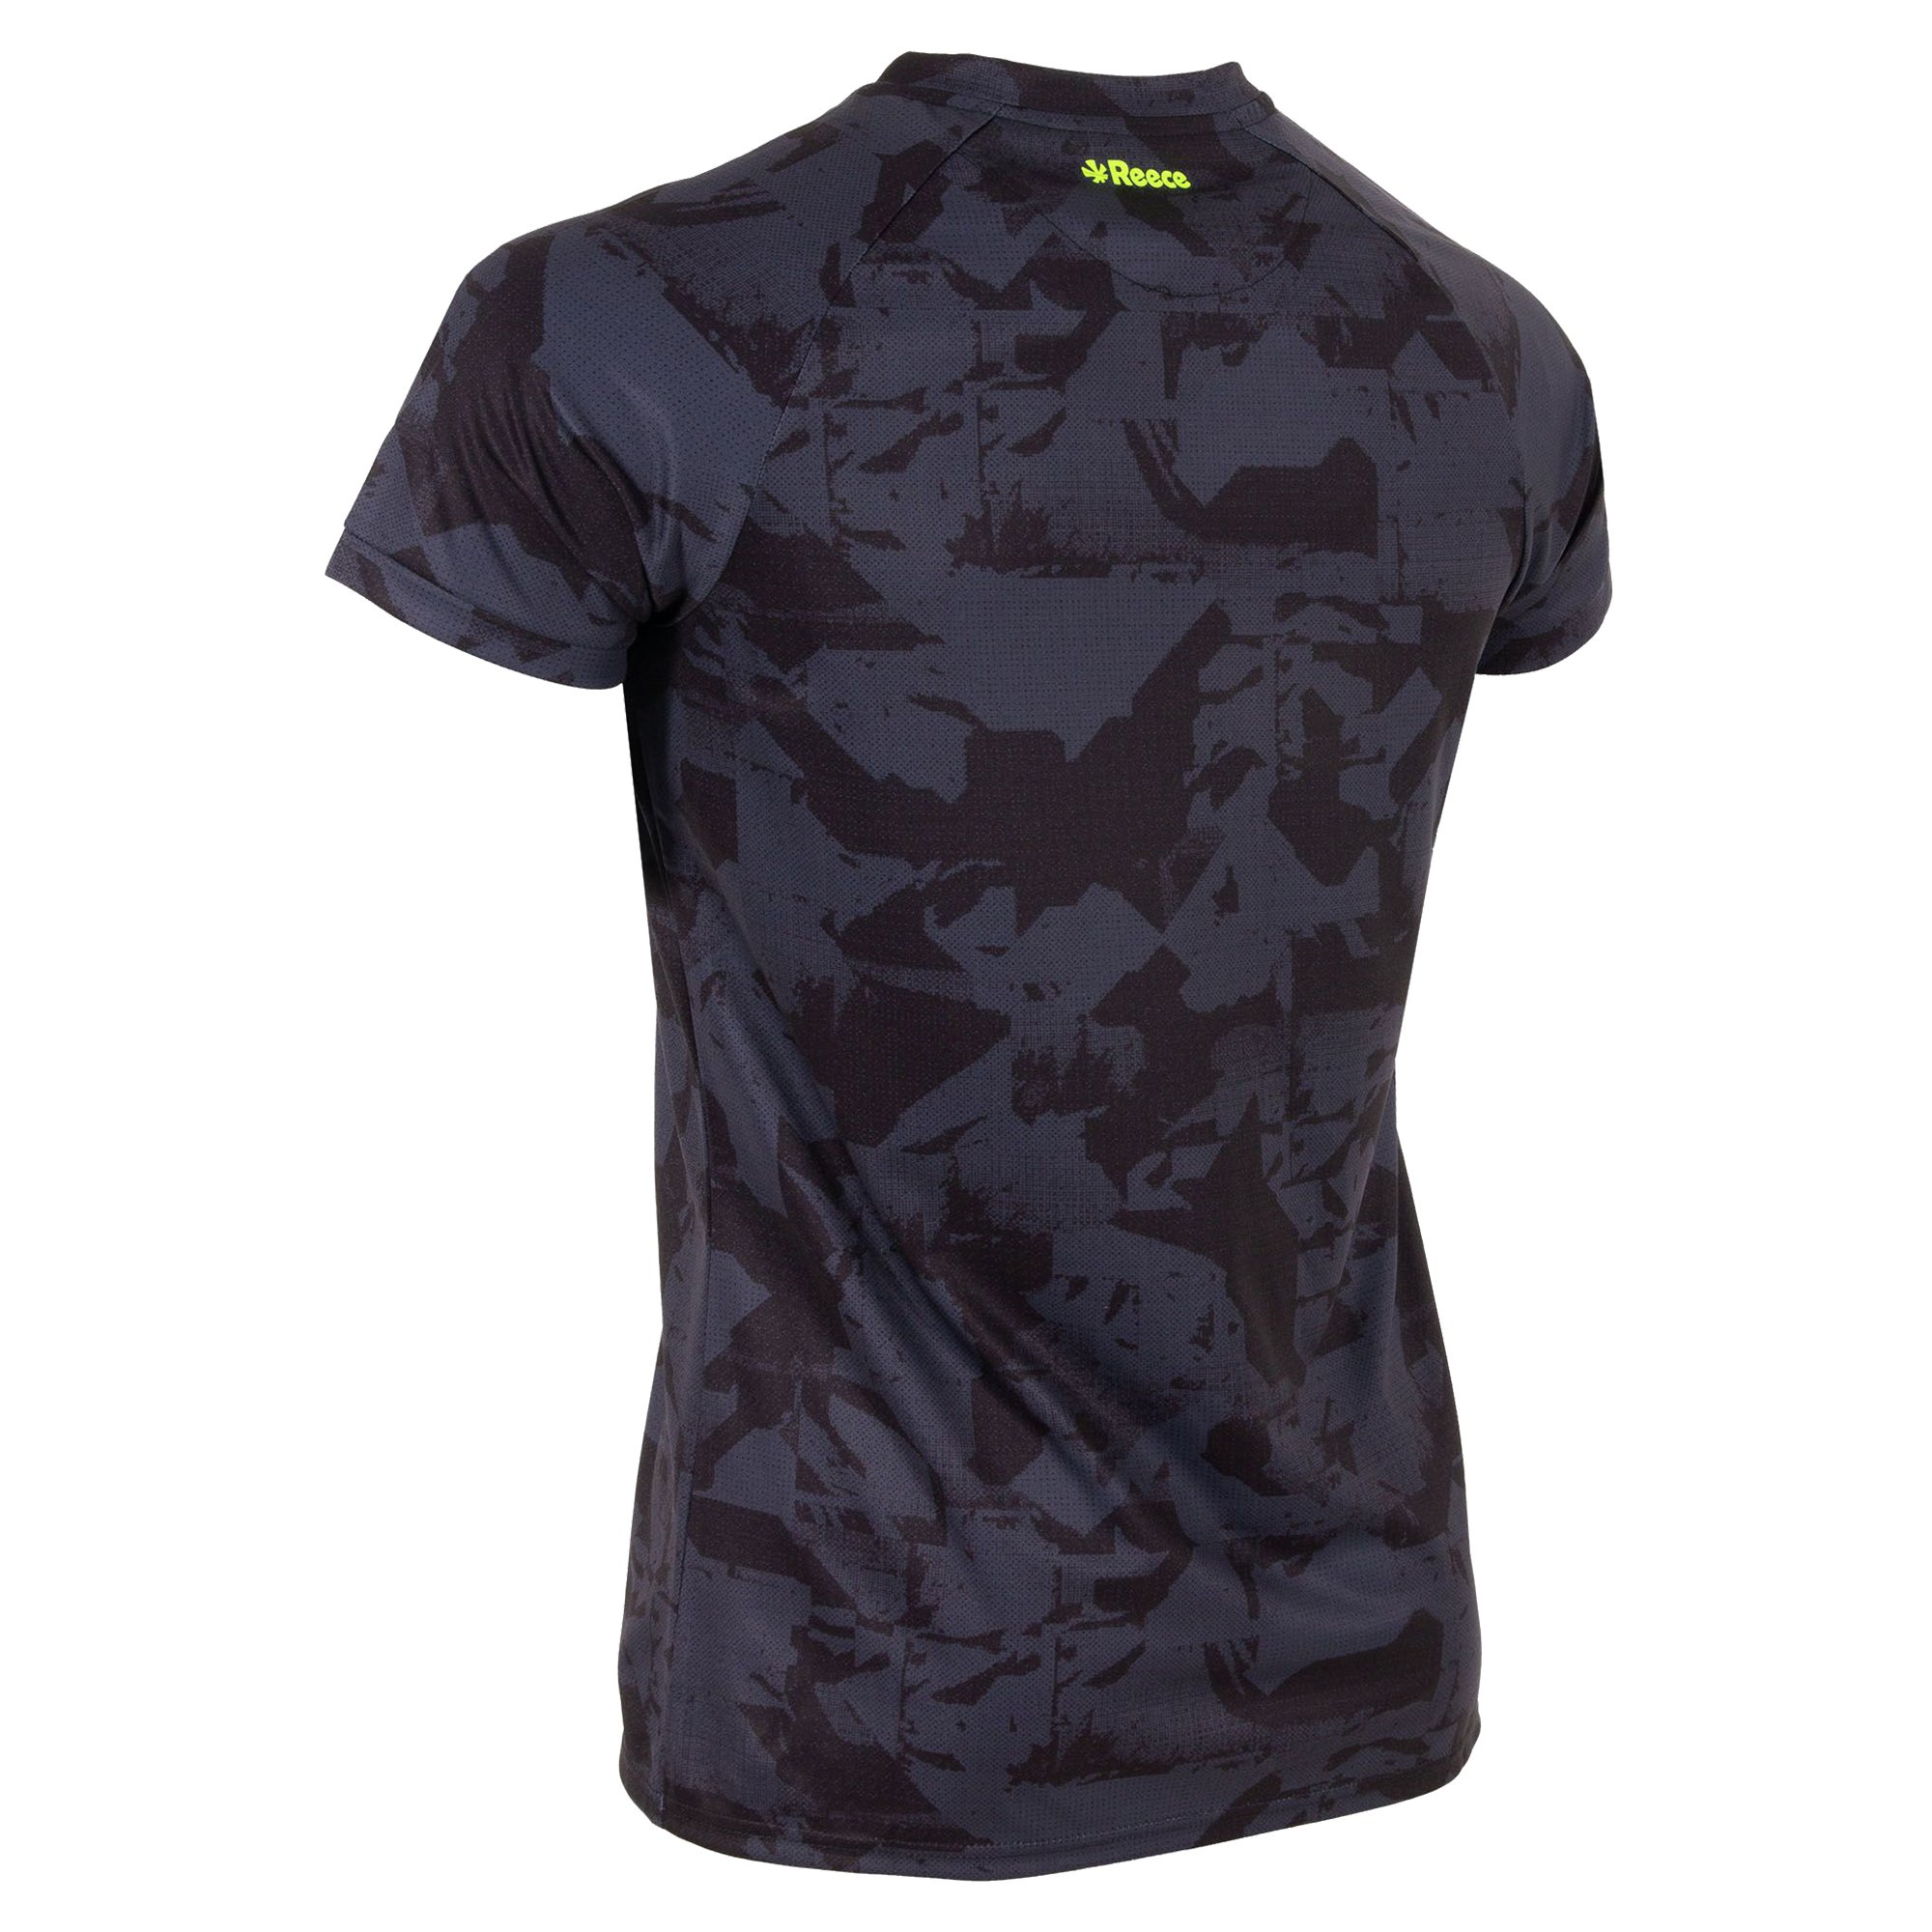 Reece Australia Smithfield Shirt Limited